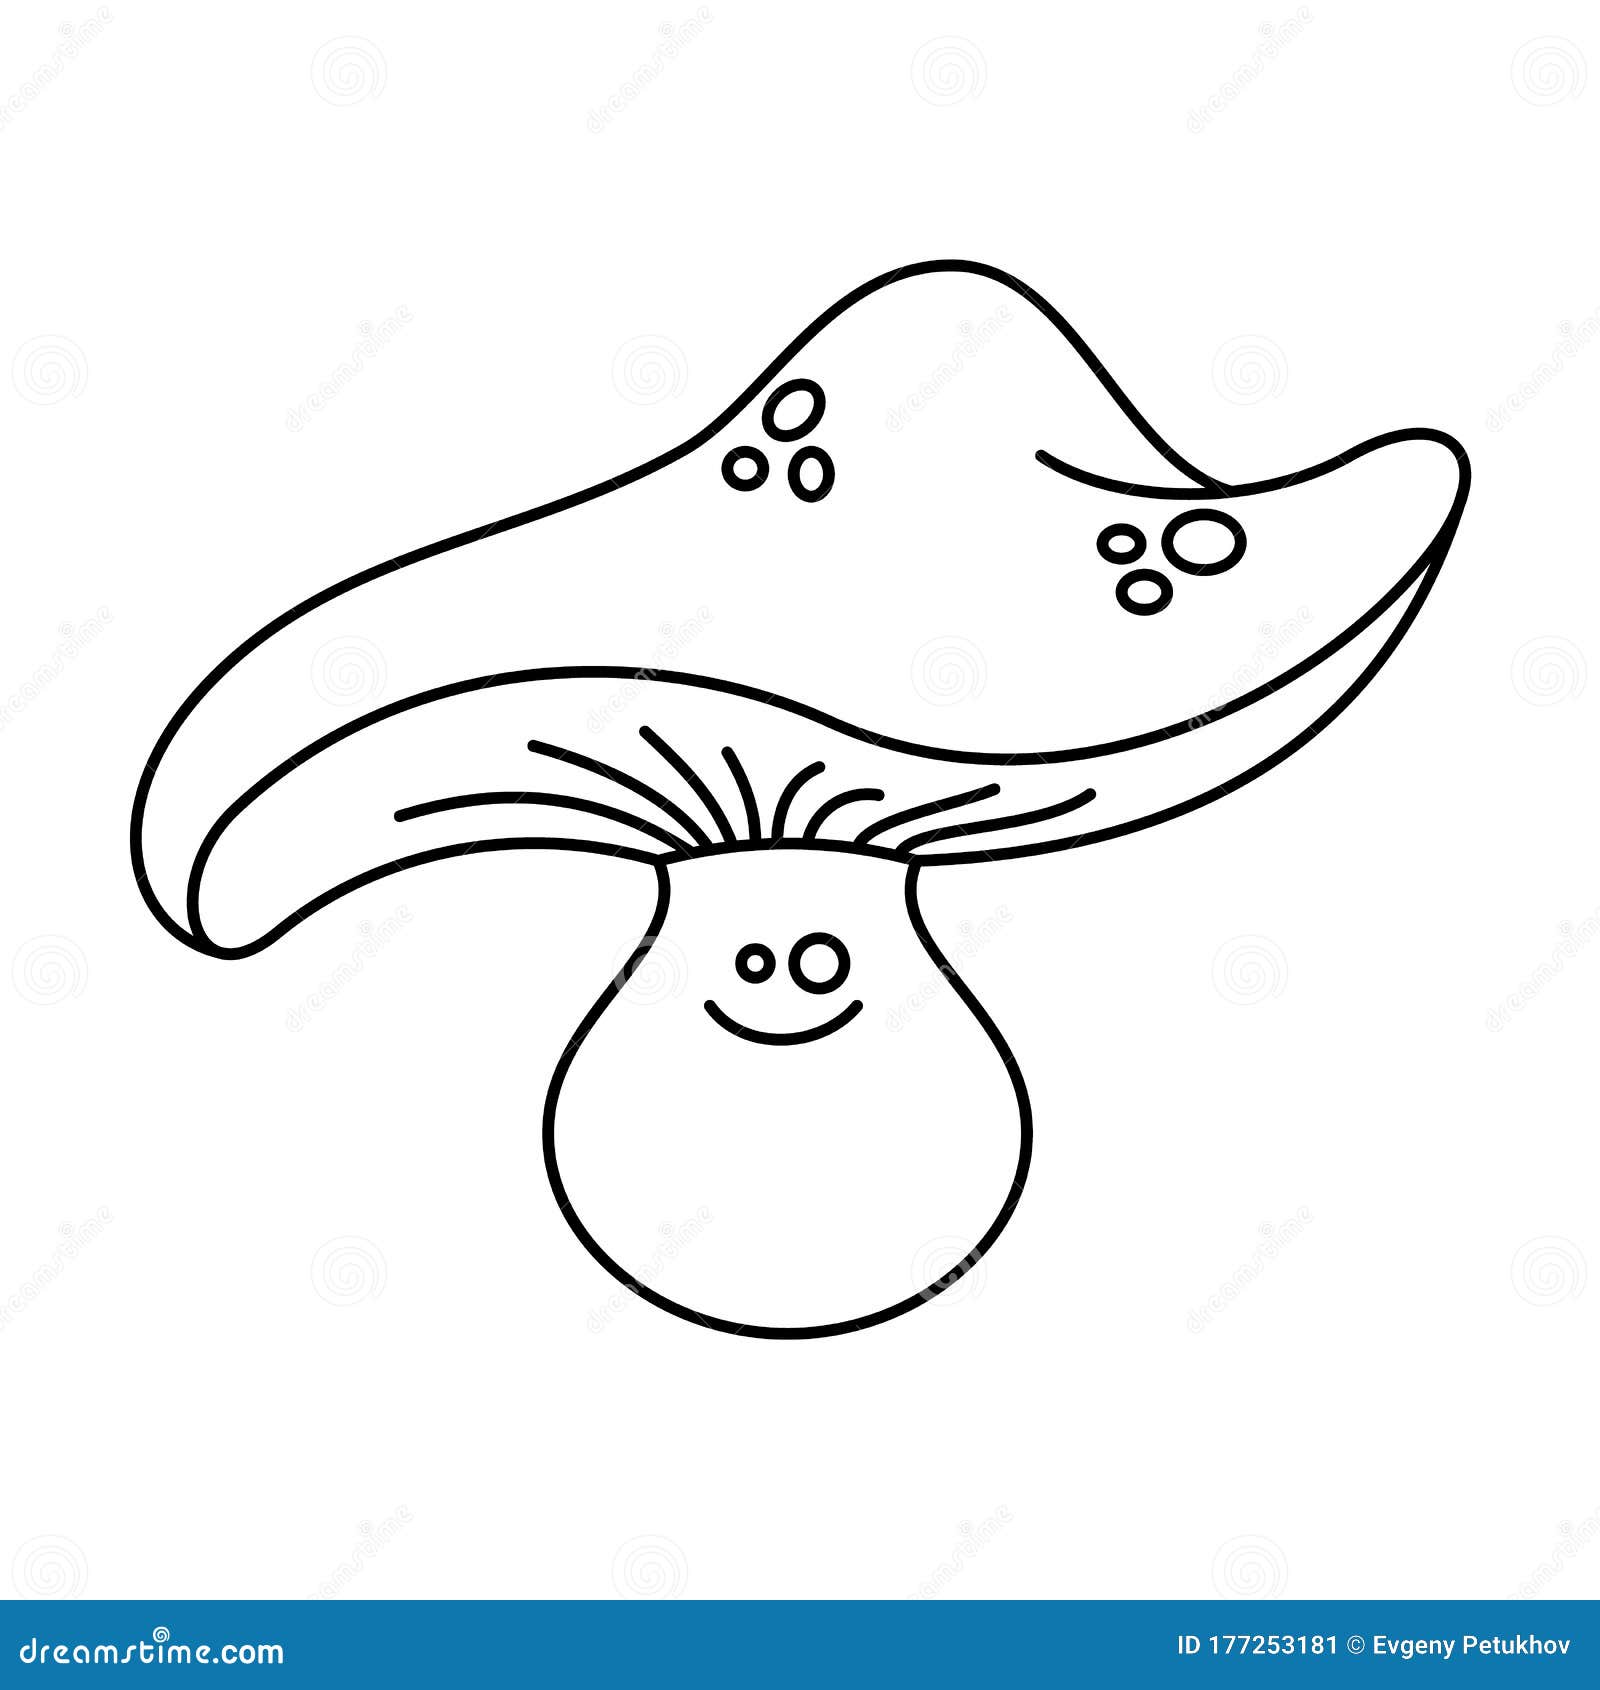 Cartoon Mushroom on a White Background. Contour Design for Self ...